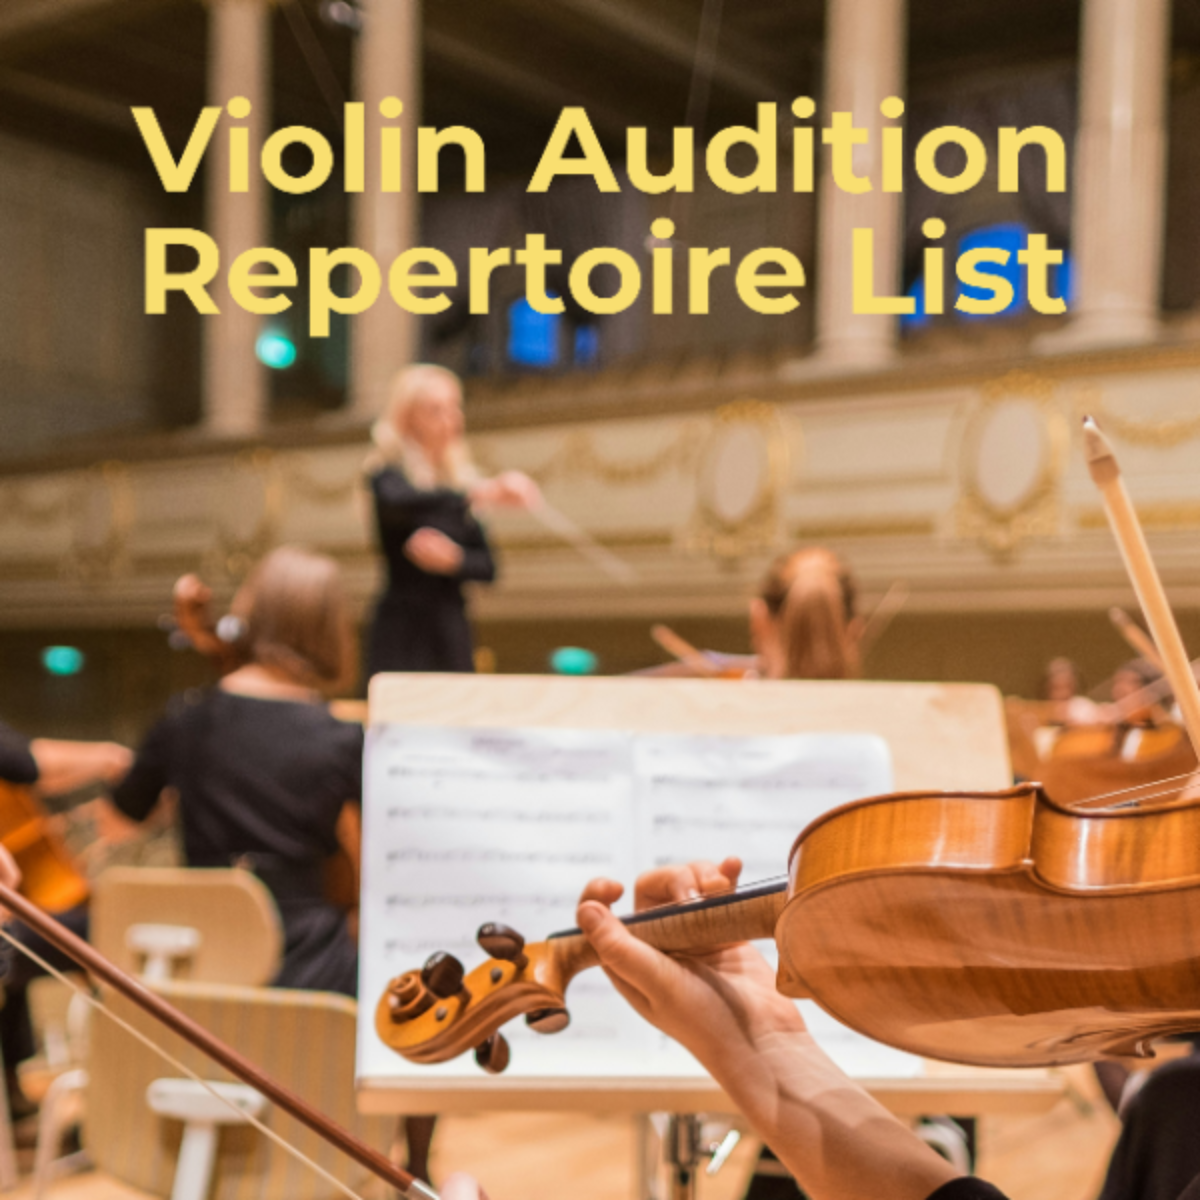 Violin Audition Repertoire List Template